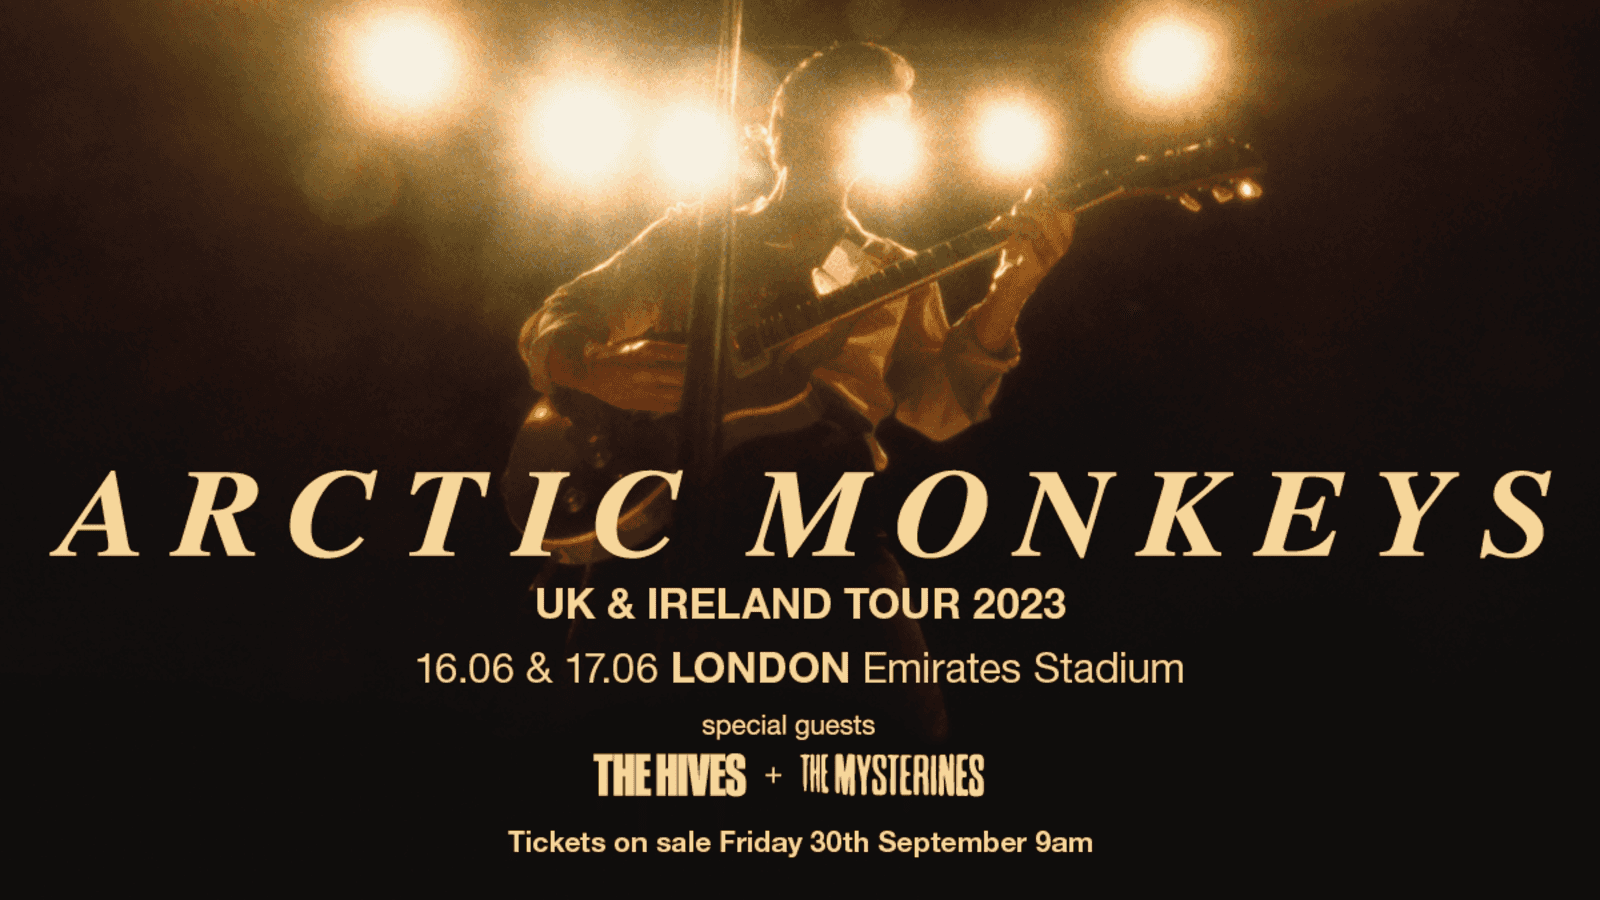 Arctic Monkeys to play at Emirates Stadium